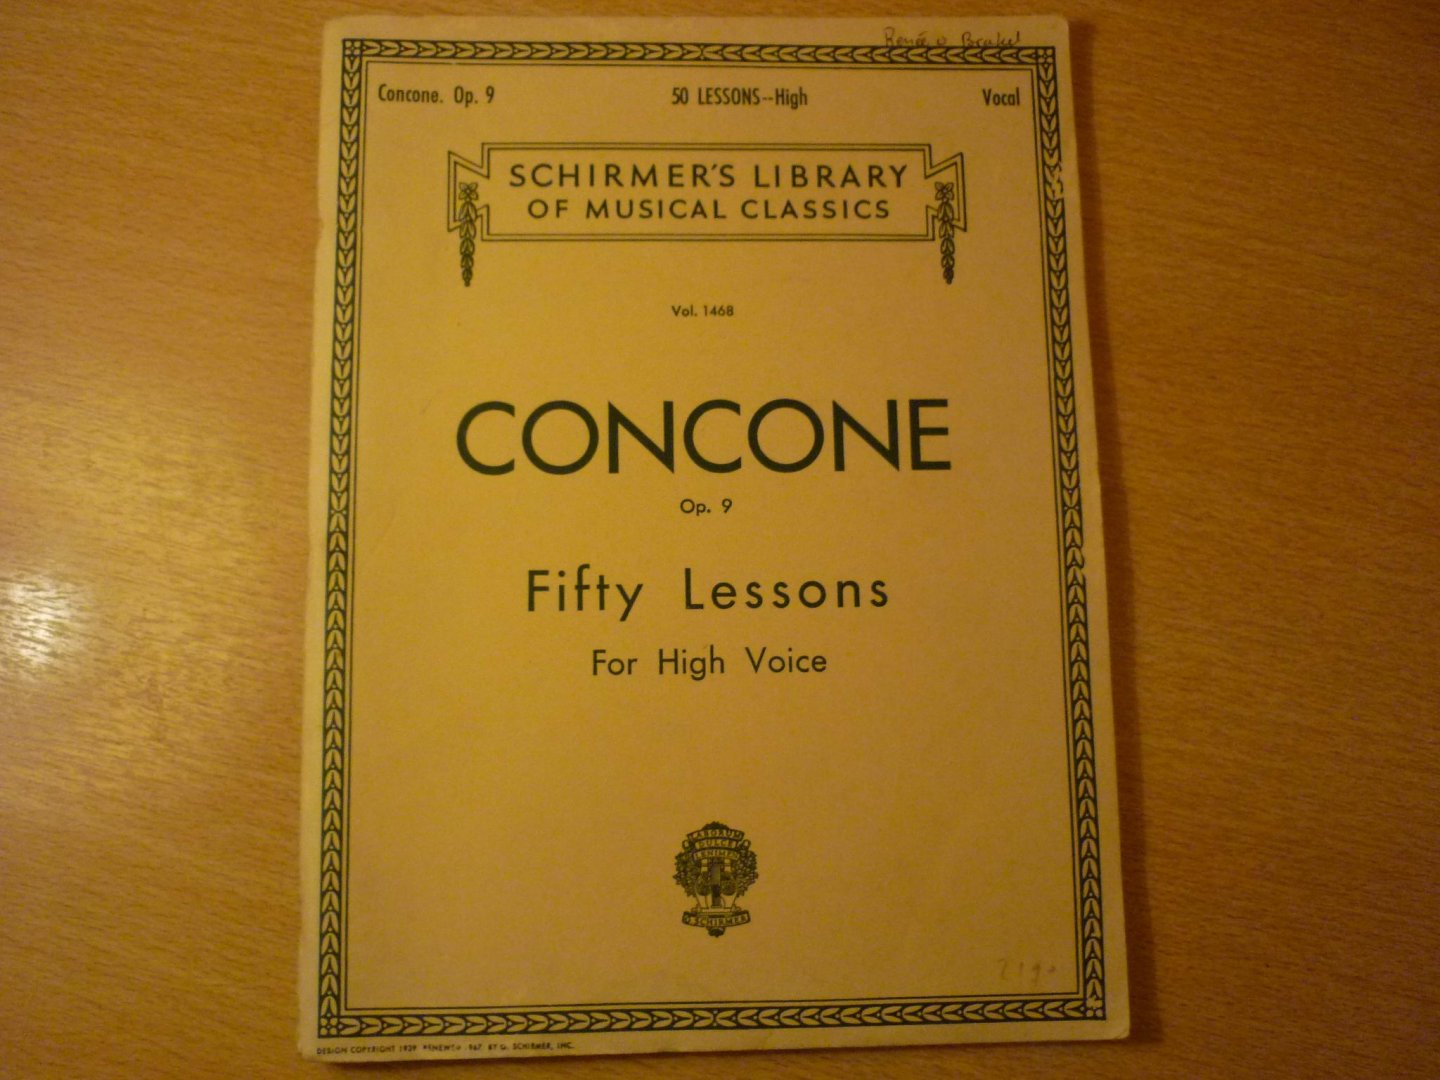 Concone Giuseppe - Concone 50 Lessons op. 9 High Voice (Lb1468), piano